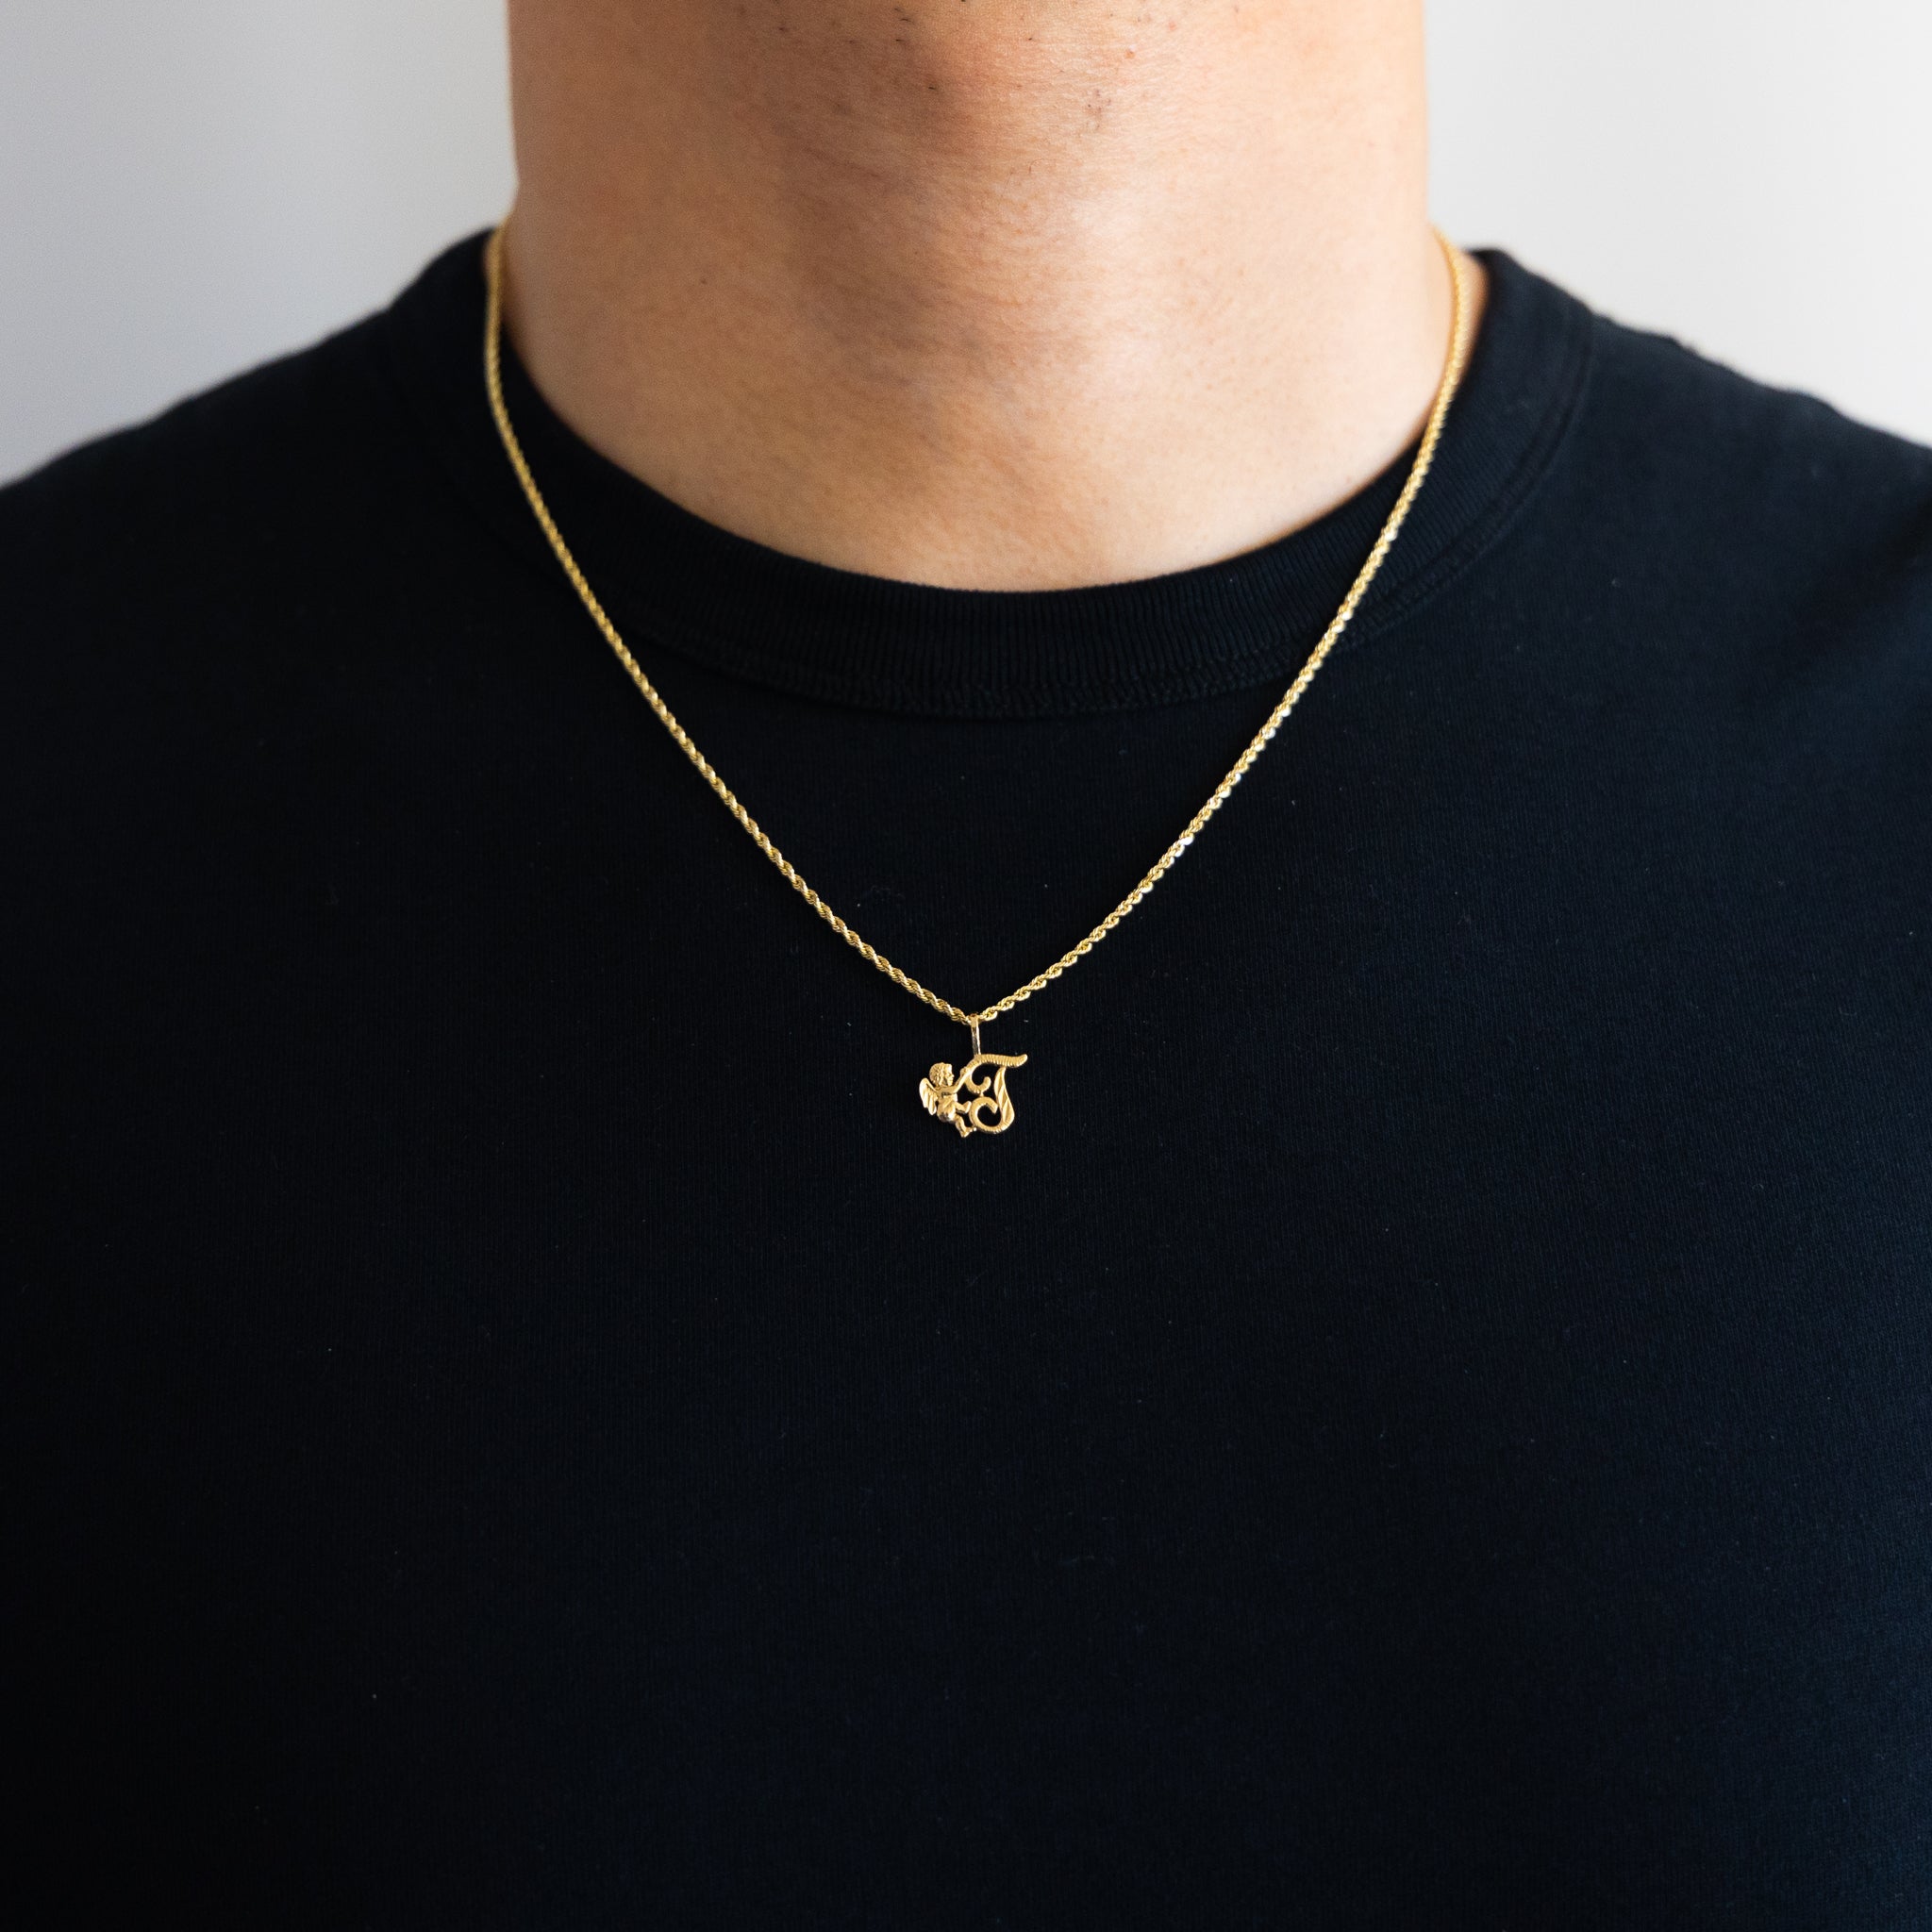 Gold Angel Letter T Pendant | A-Z Pendants - Charlie & Co. Jewelry